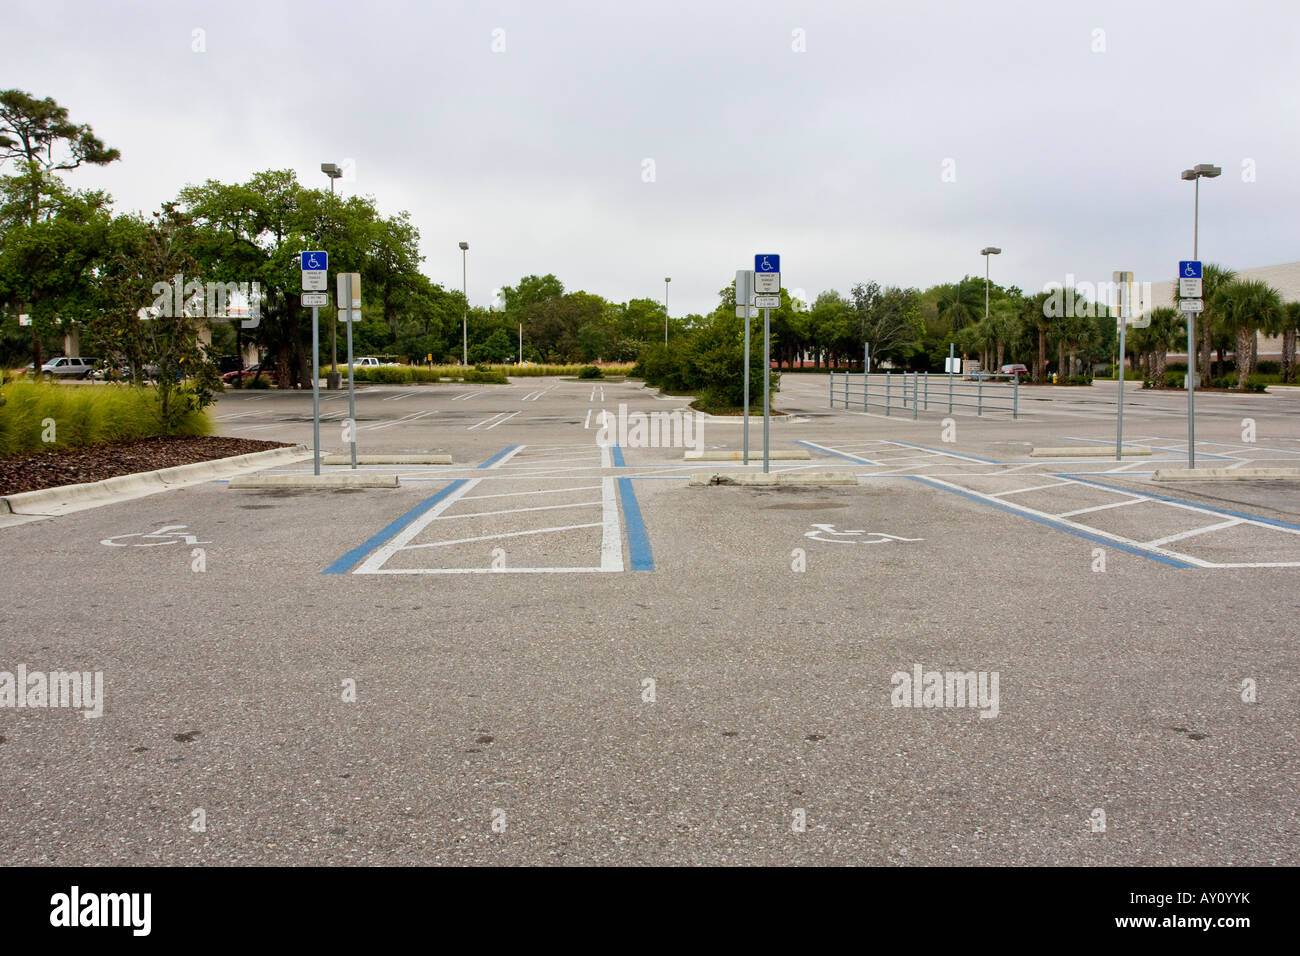 Empty Handicap Parking Spaces Stock Photo